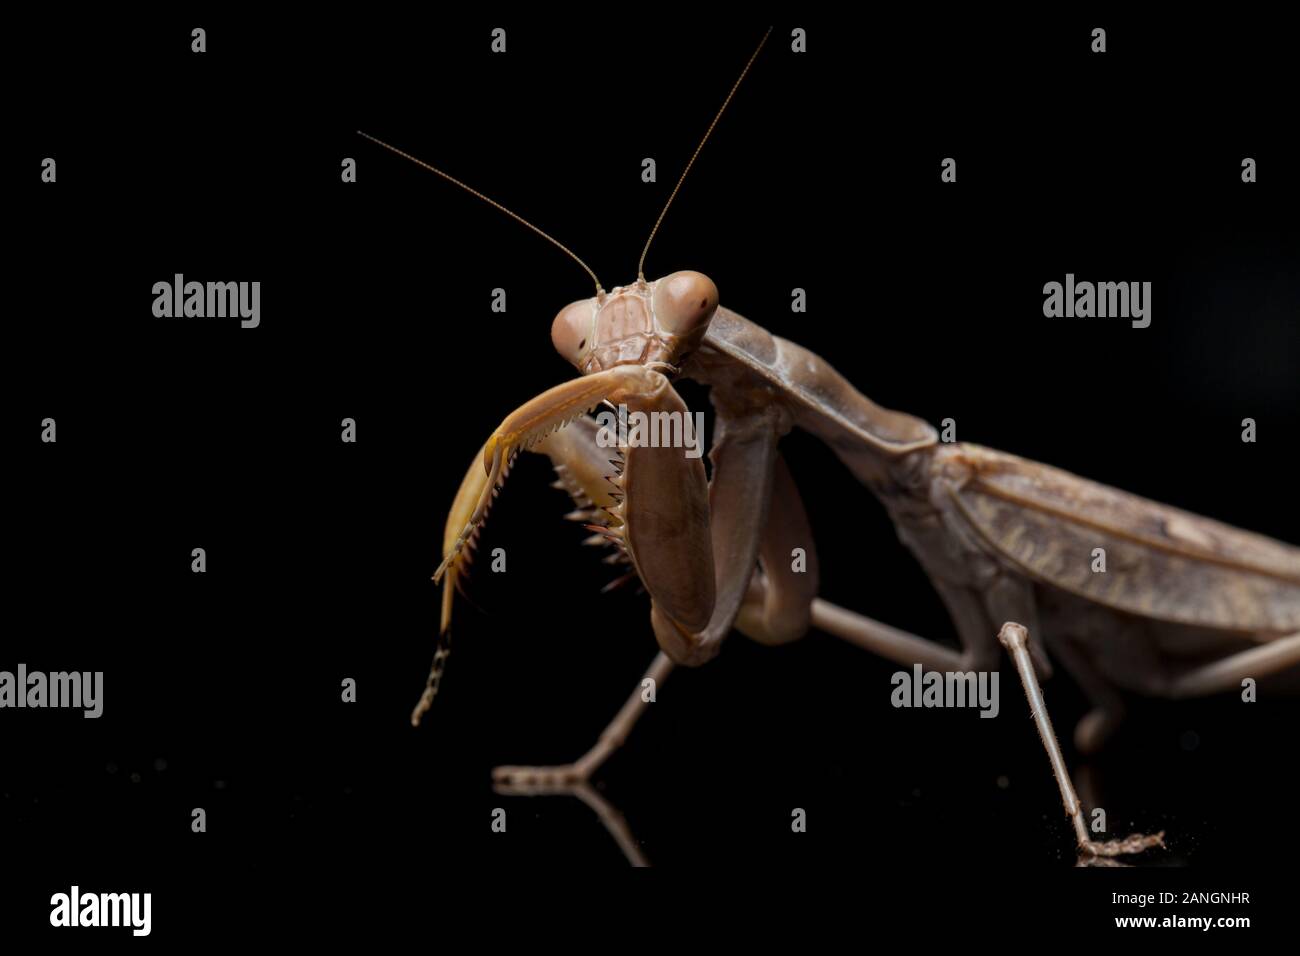 Giant Asian Brown Praying Mantis (Hierodula membranacea) isolated on Black background. Stock Photo